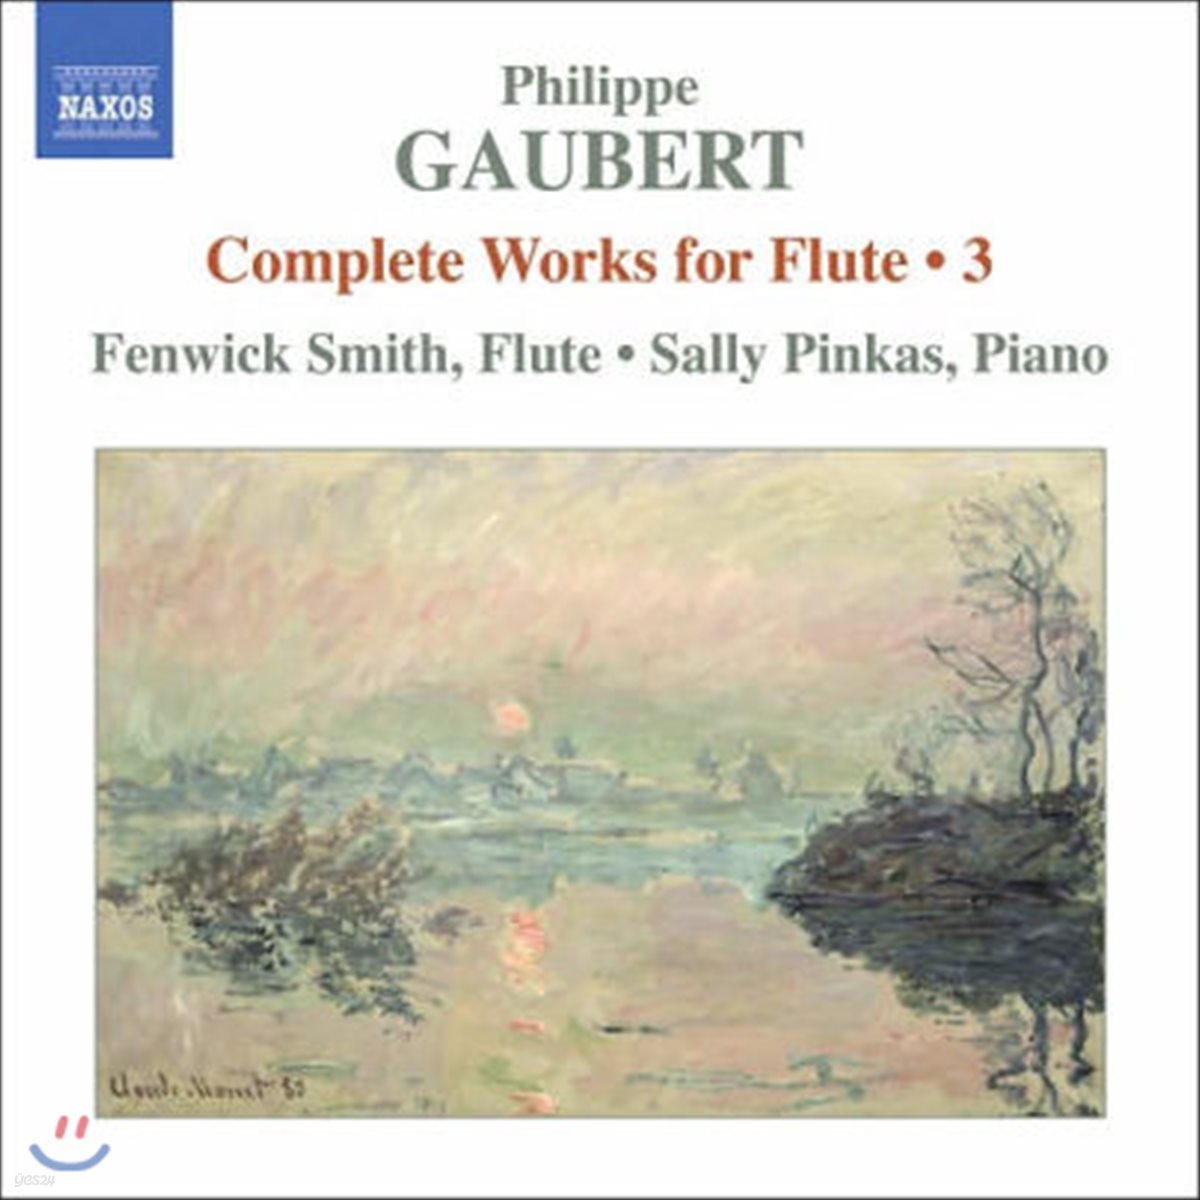 Fenwick Smith 필립 고베르: 플루트 작품 전곡 3집 (Philippe Gaubert: Works For Flute Vol.3)